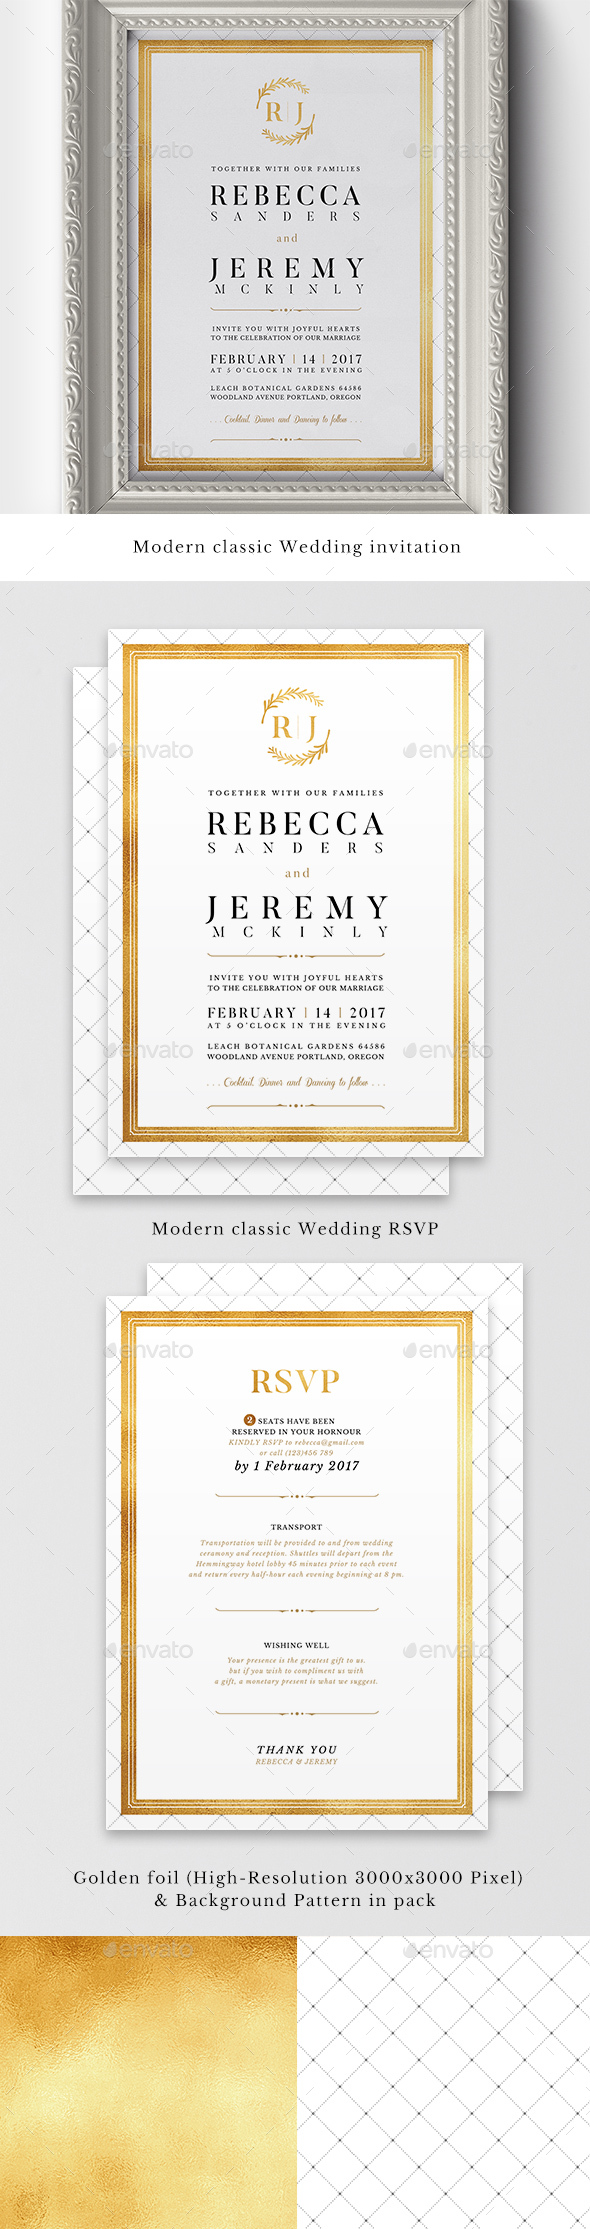 Modern Classic Wedding Invitations